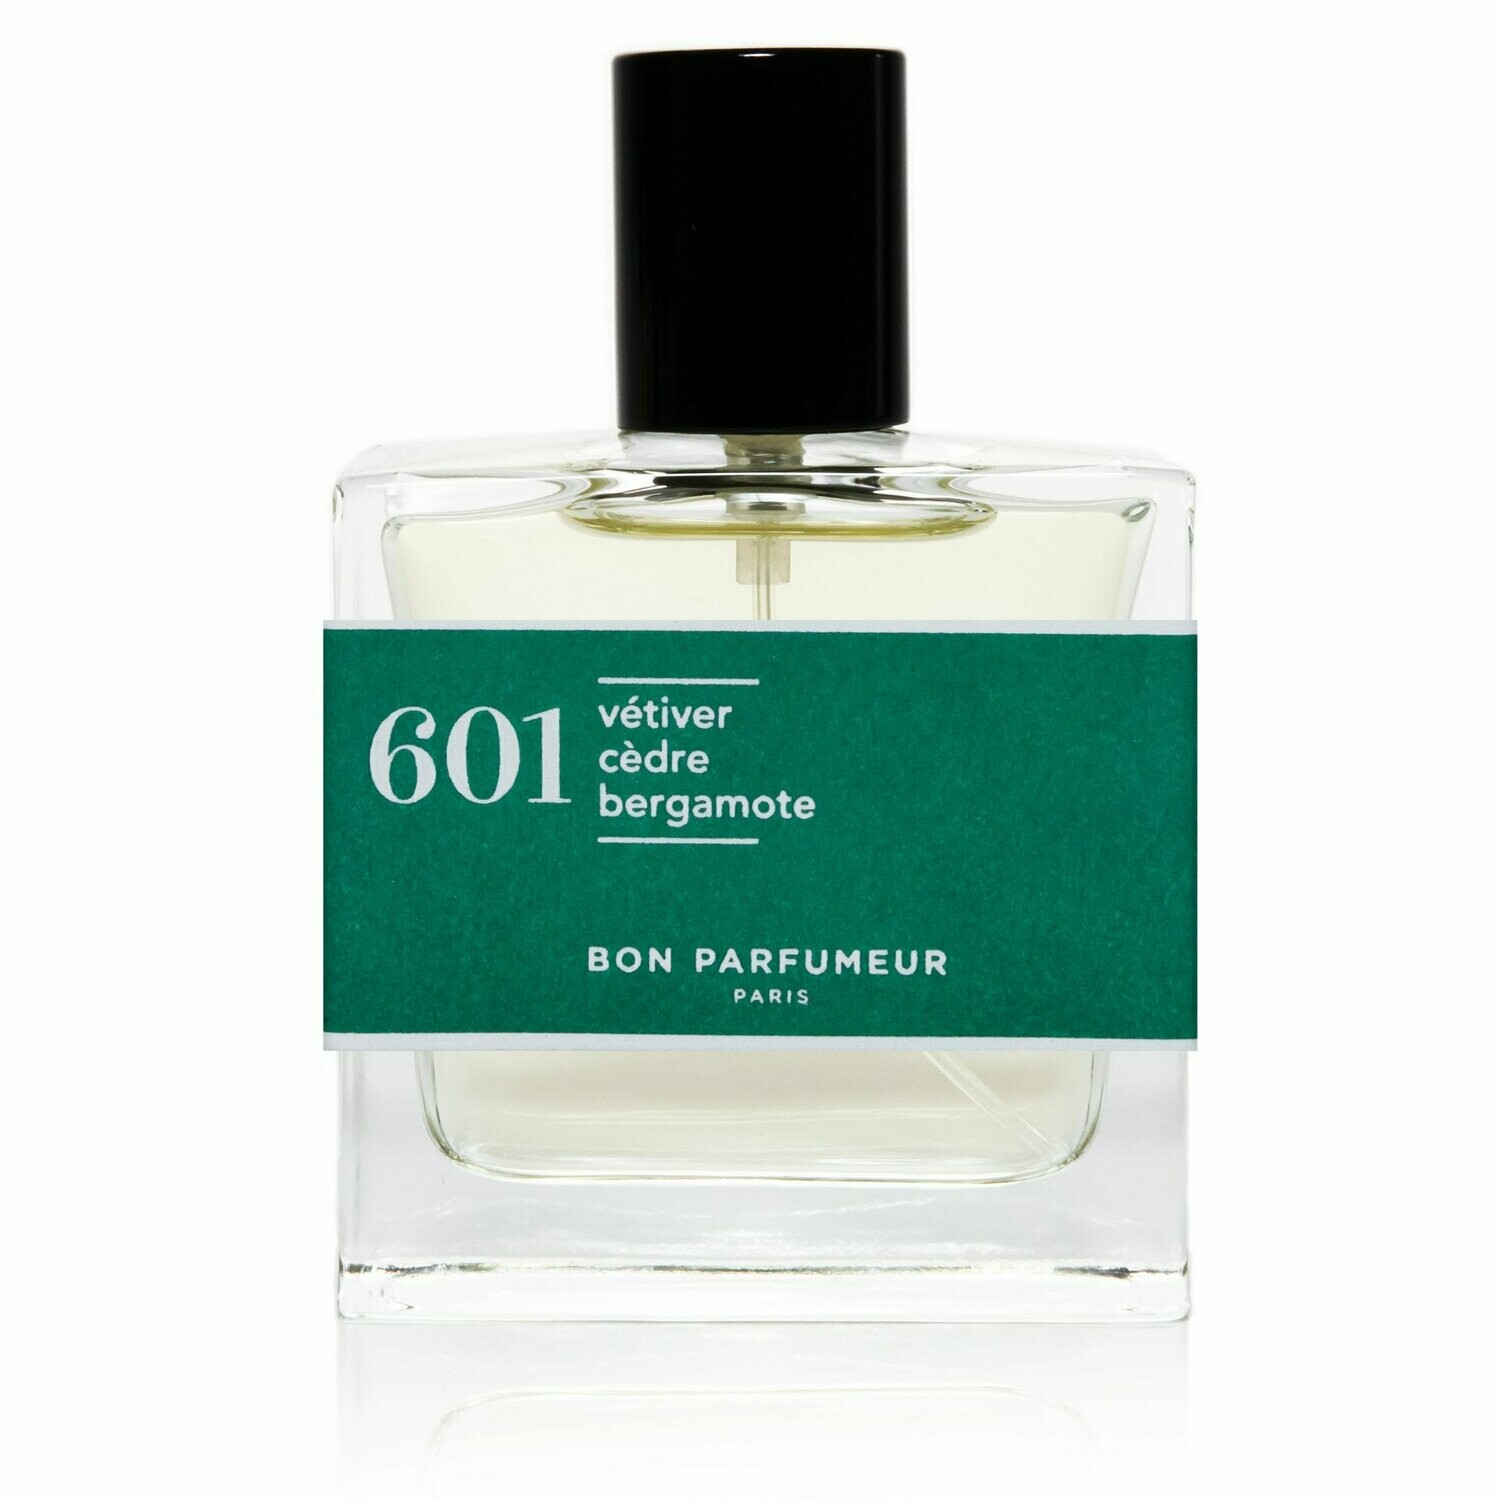 Bon Parfumeur - 601: Vetiver, Cedar and Bergamot
Eau de Parfum 30ml
Vetiver, Zedernholz, Bergamotte